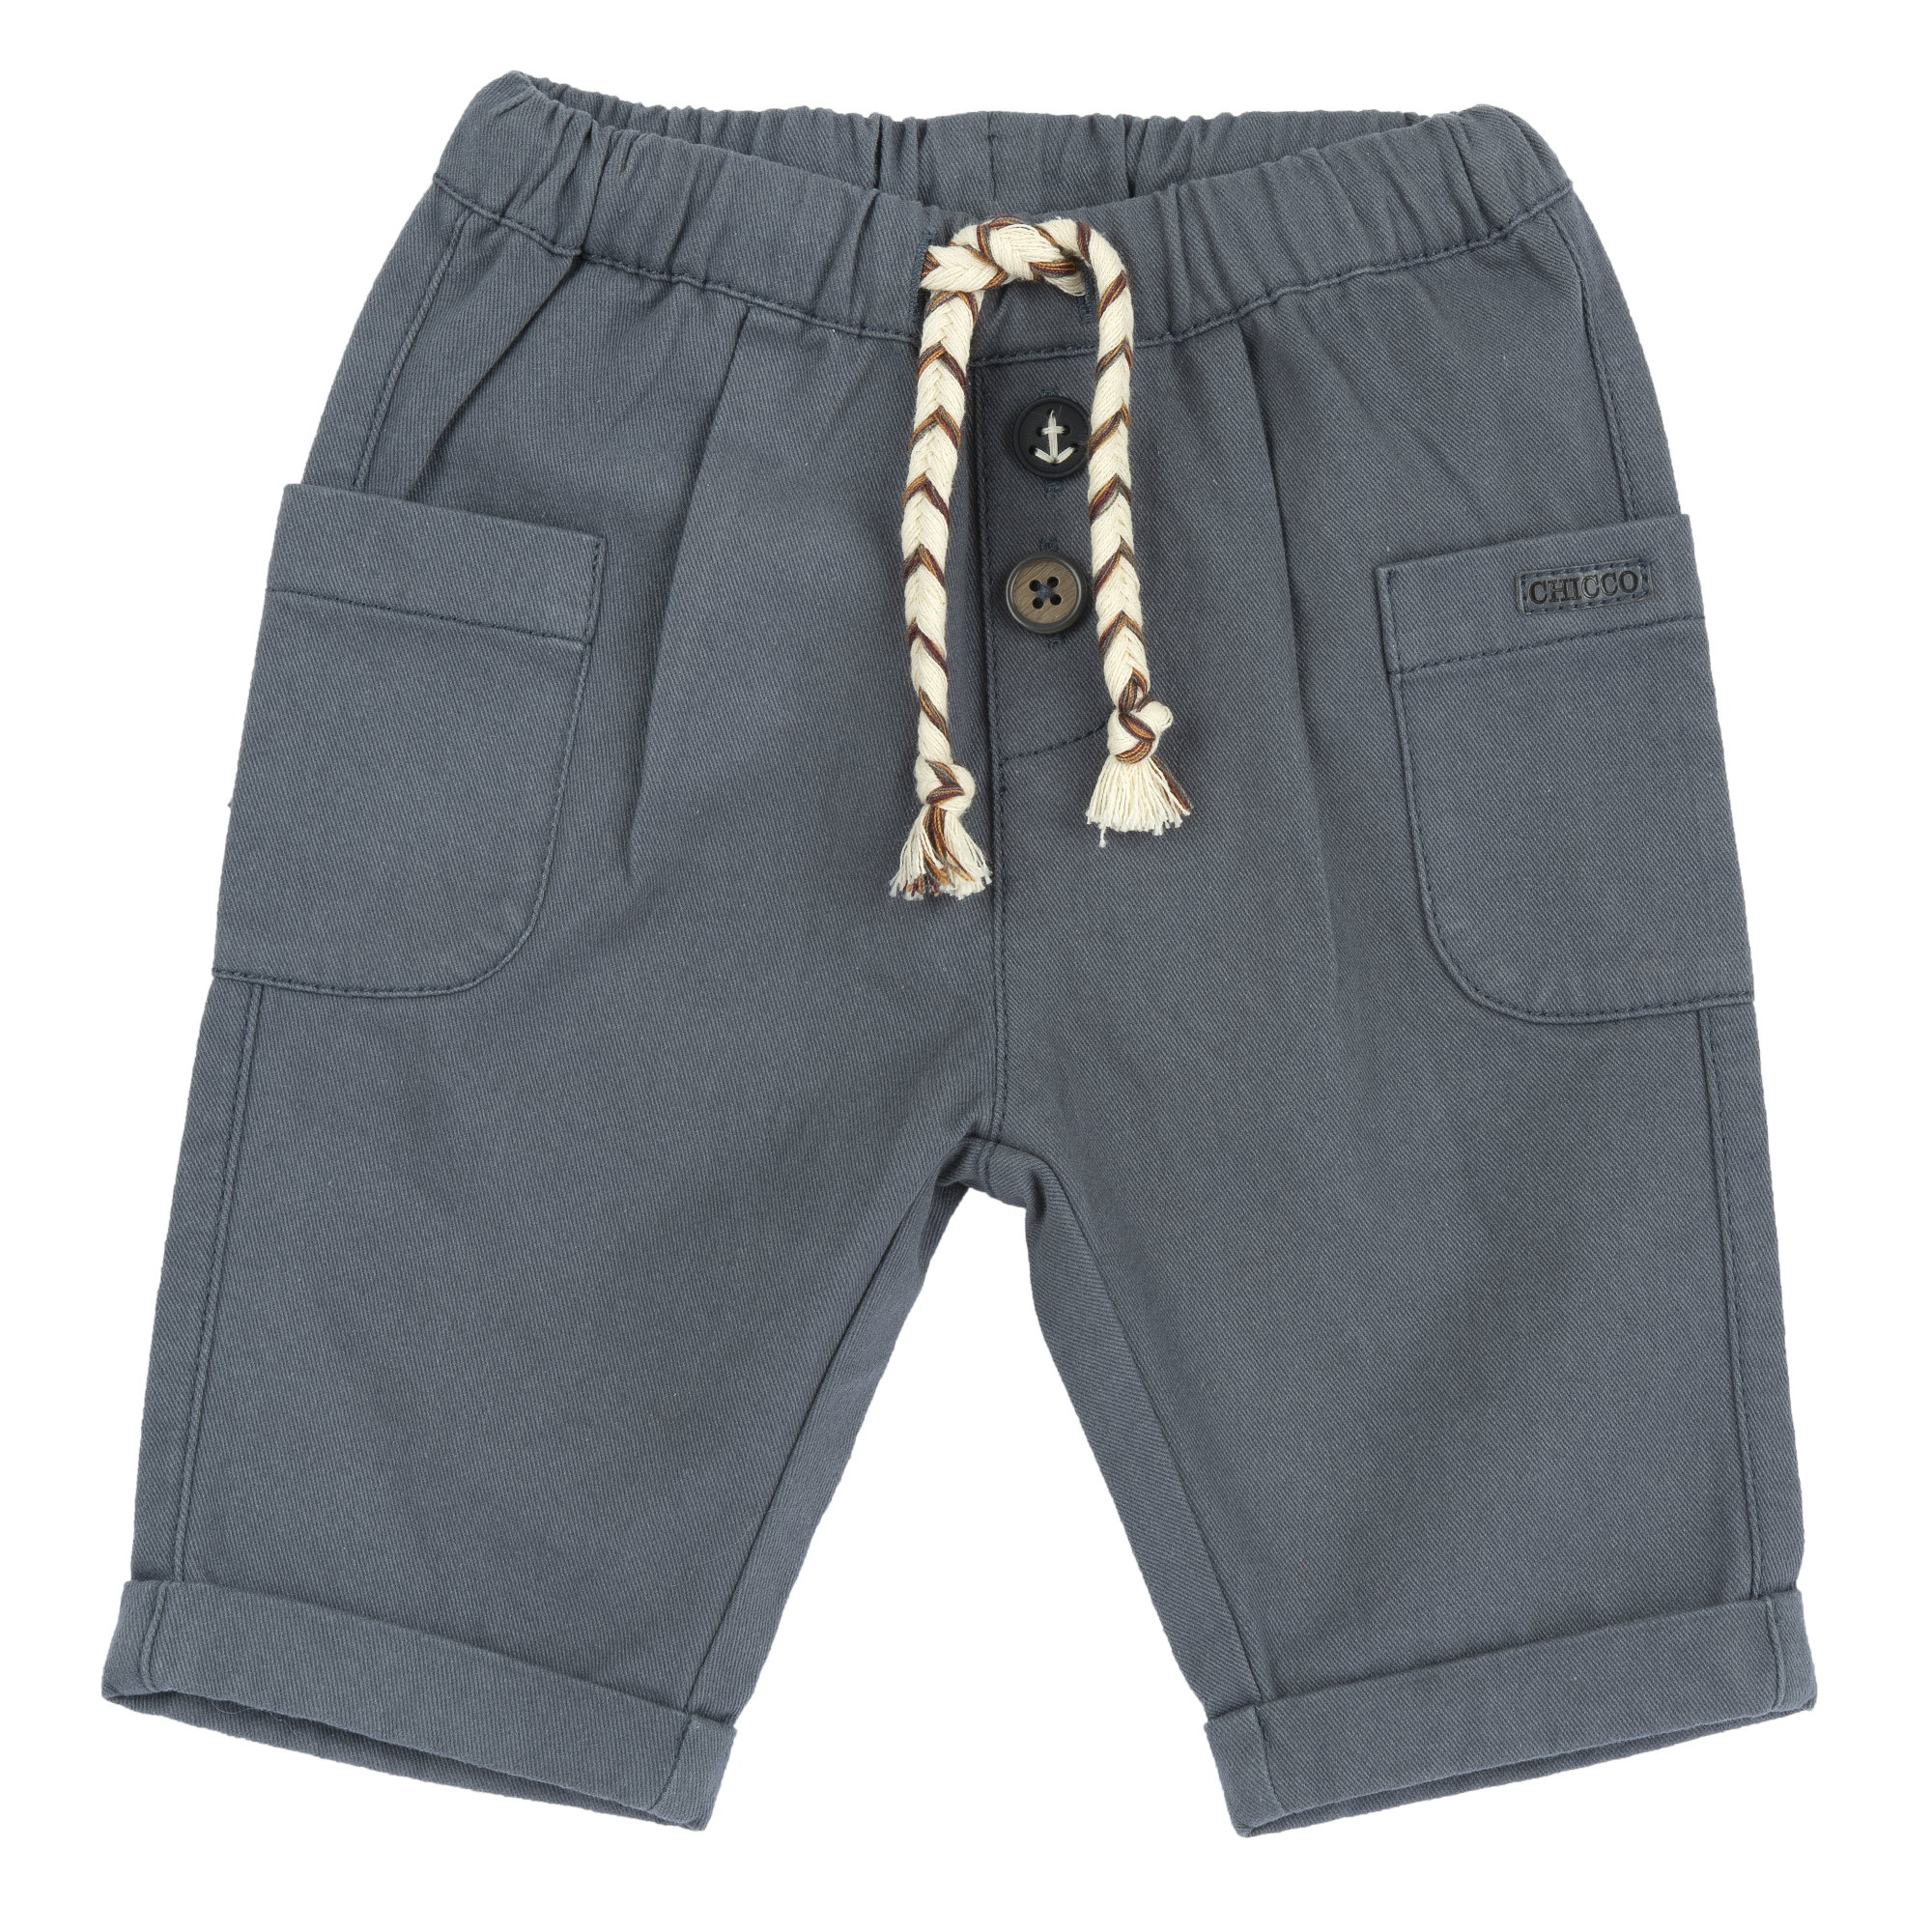 Pantaloni Copii Chicco, Albastru Deschis, 08980-66mfco